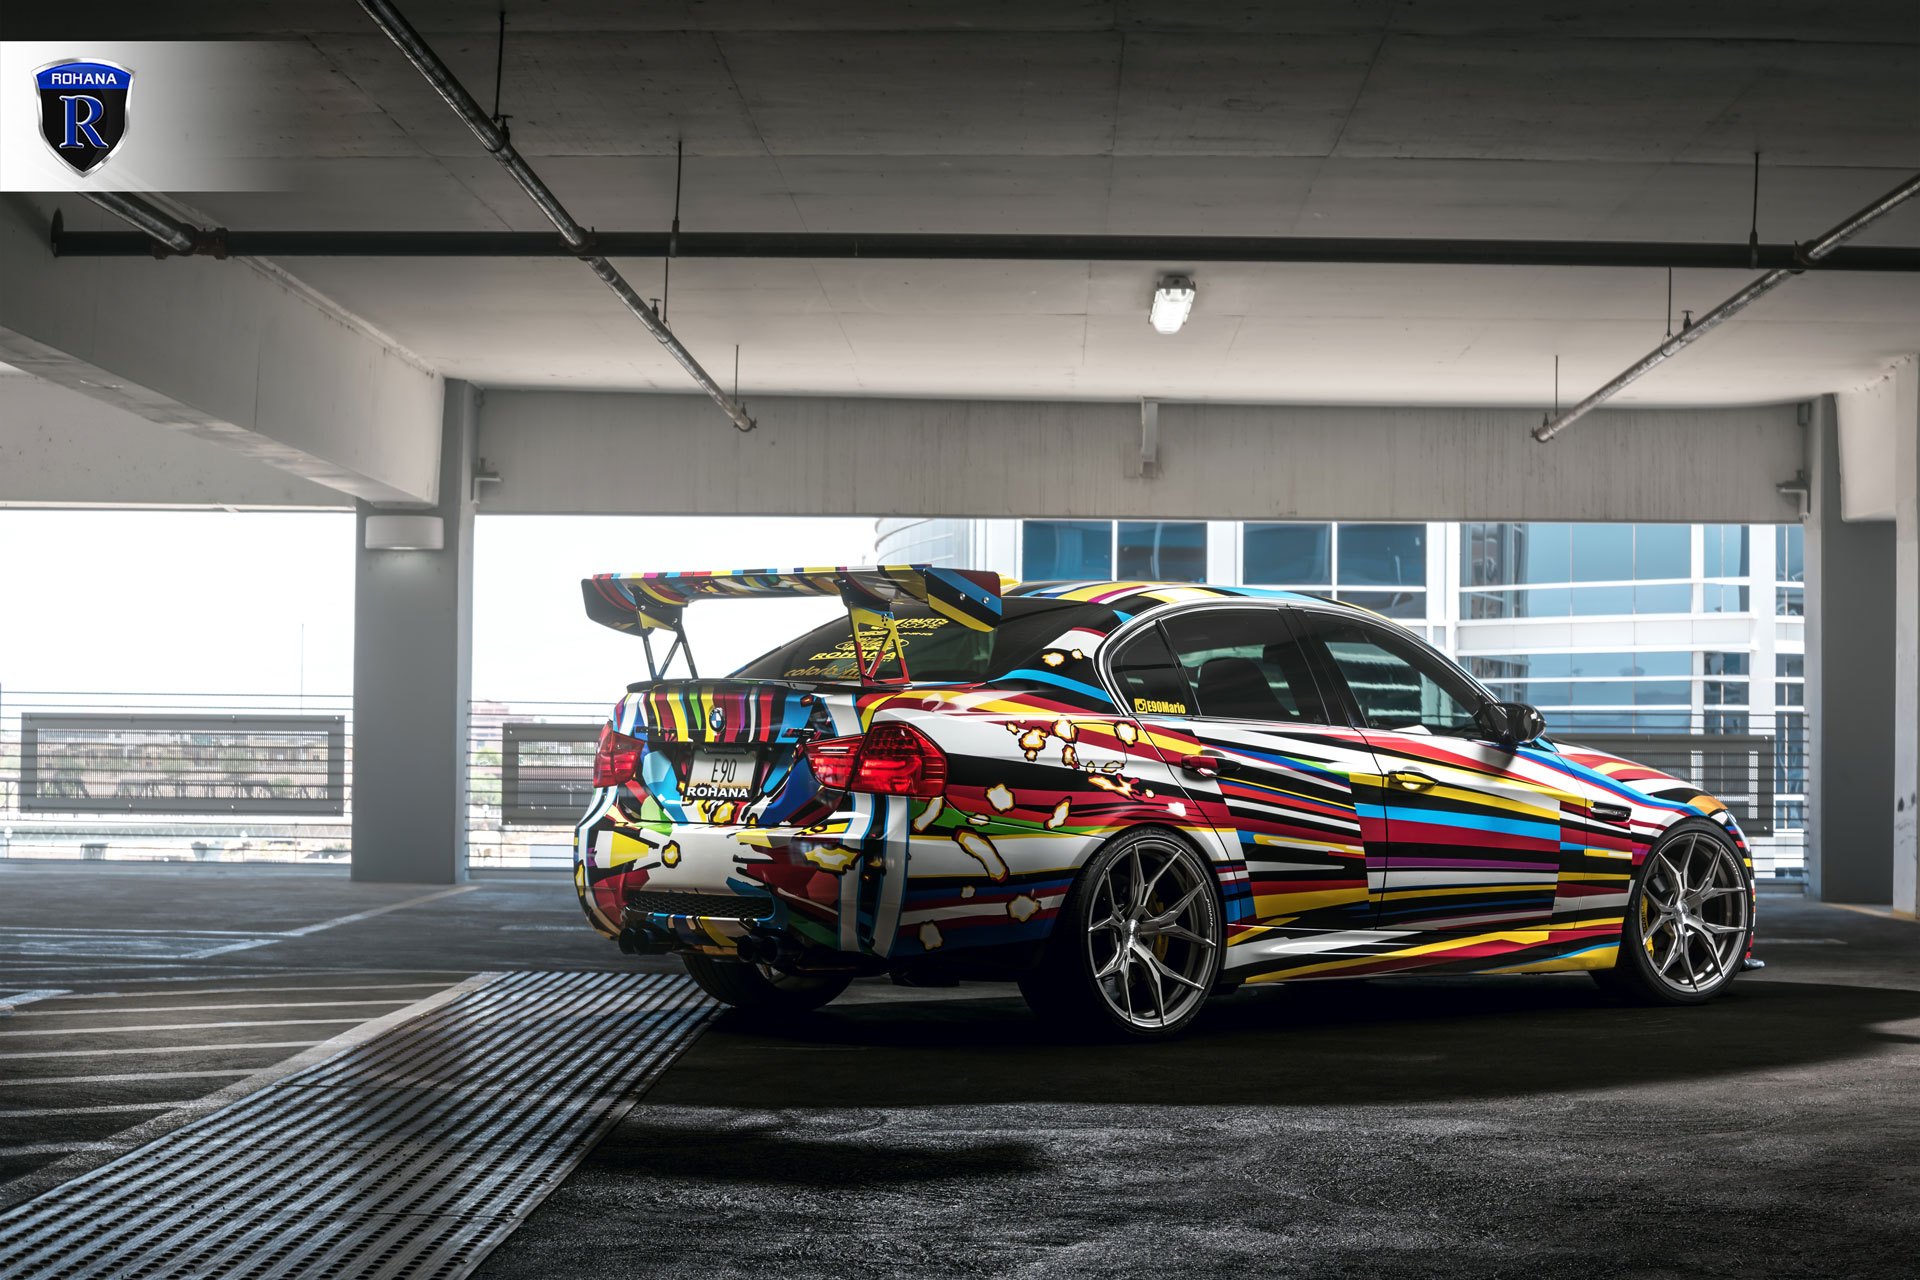 Large Sport Wing Spoiler on Custom BMW 3 Series - Photo by Rohana